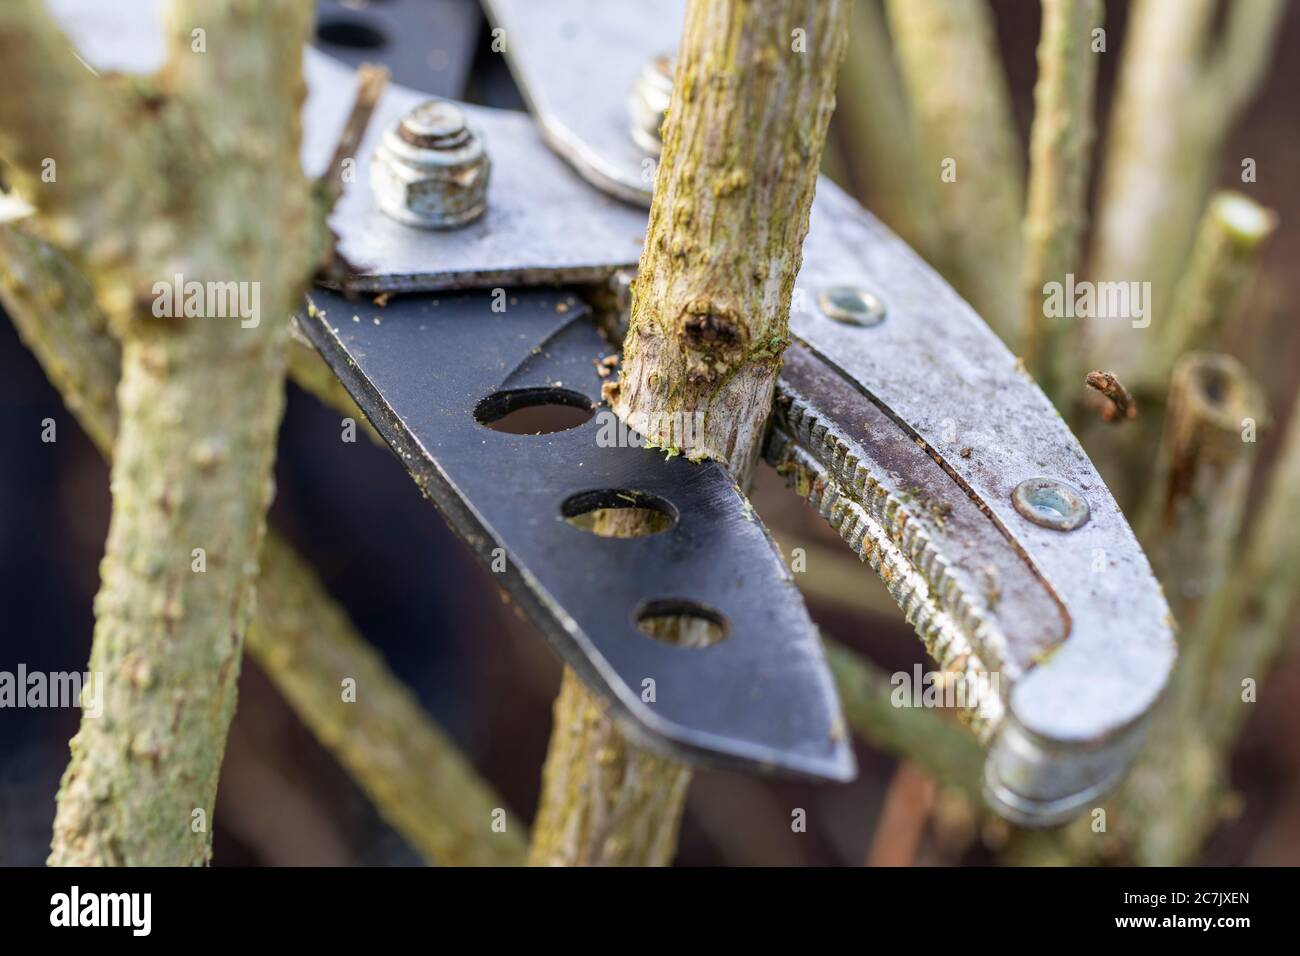 Yellowwood dogwood, pruning, anvil pruning shears, detail, cutting blade, shrub cut, garden, Wilhelmshaven, Stock Photo